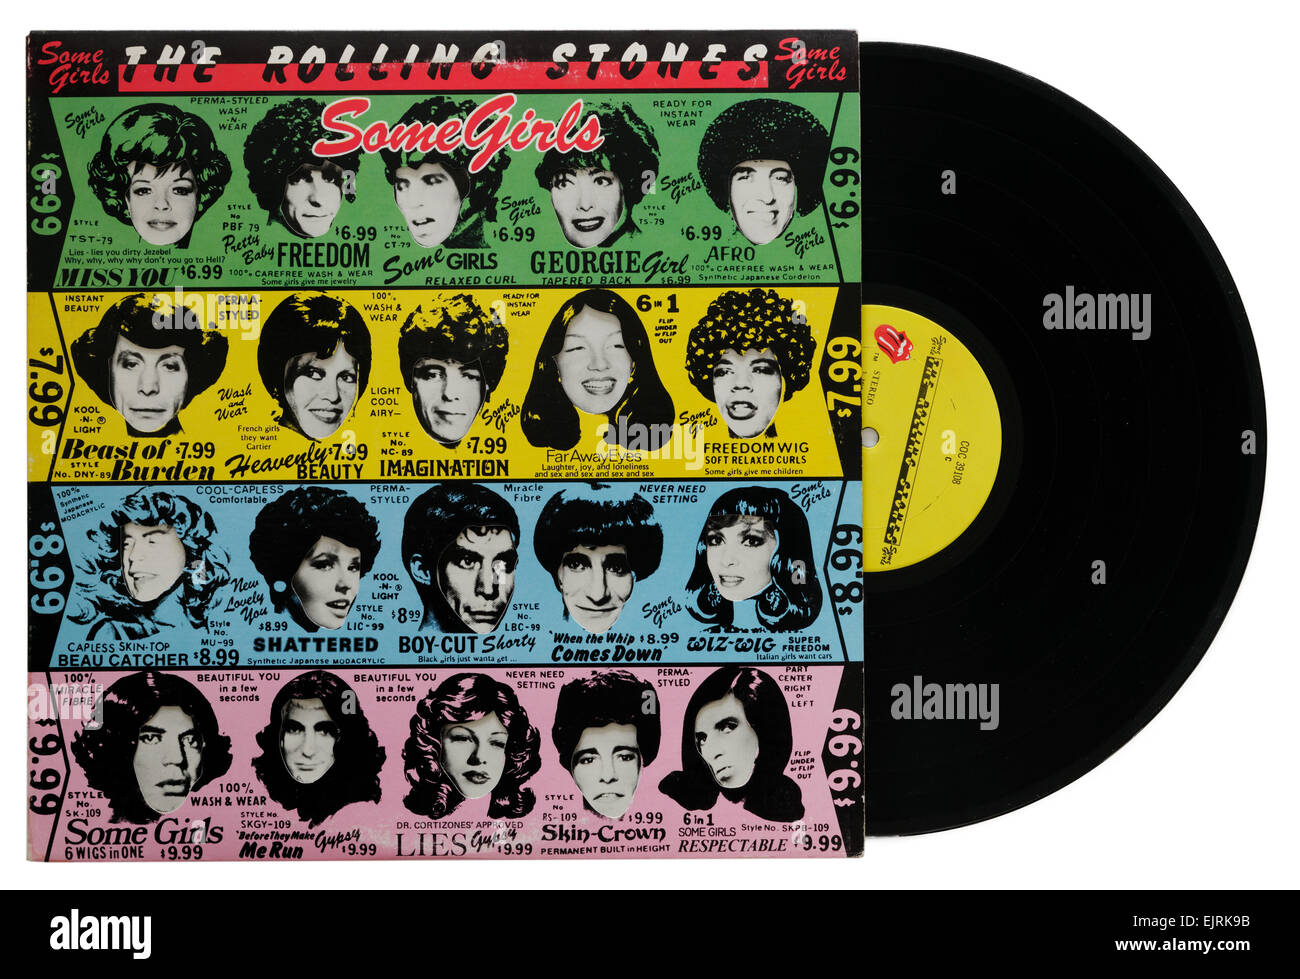 Some girls обложка. Rolling Stones "some girls". Rolling Stones discography. Rolling Stones клуб. Перевод песни rolling stoned